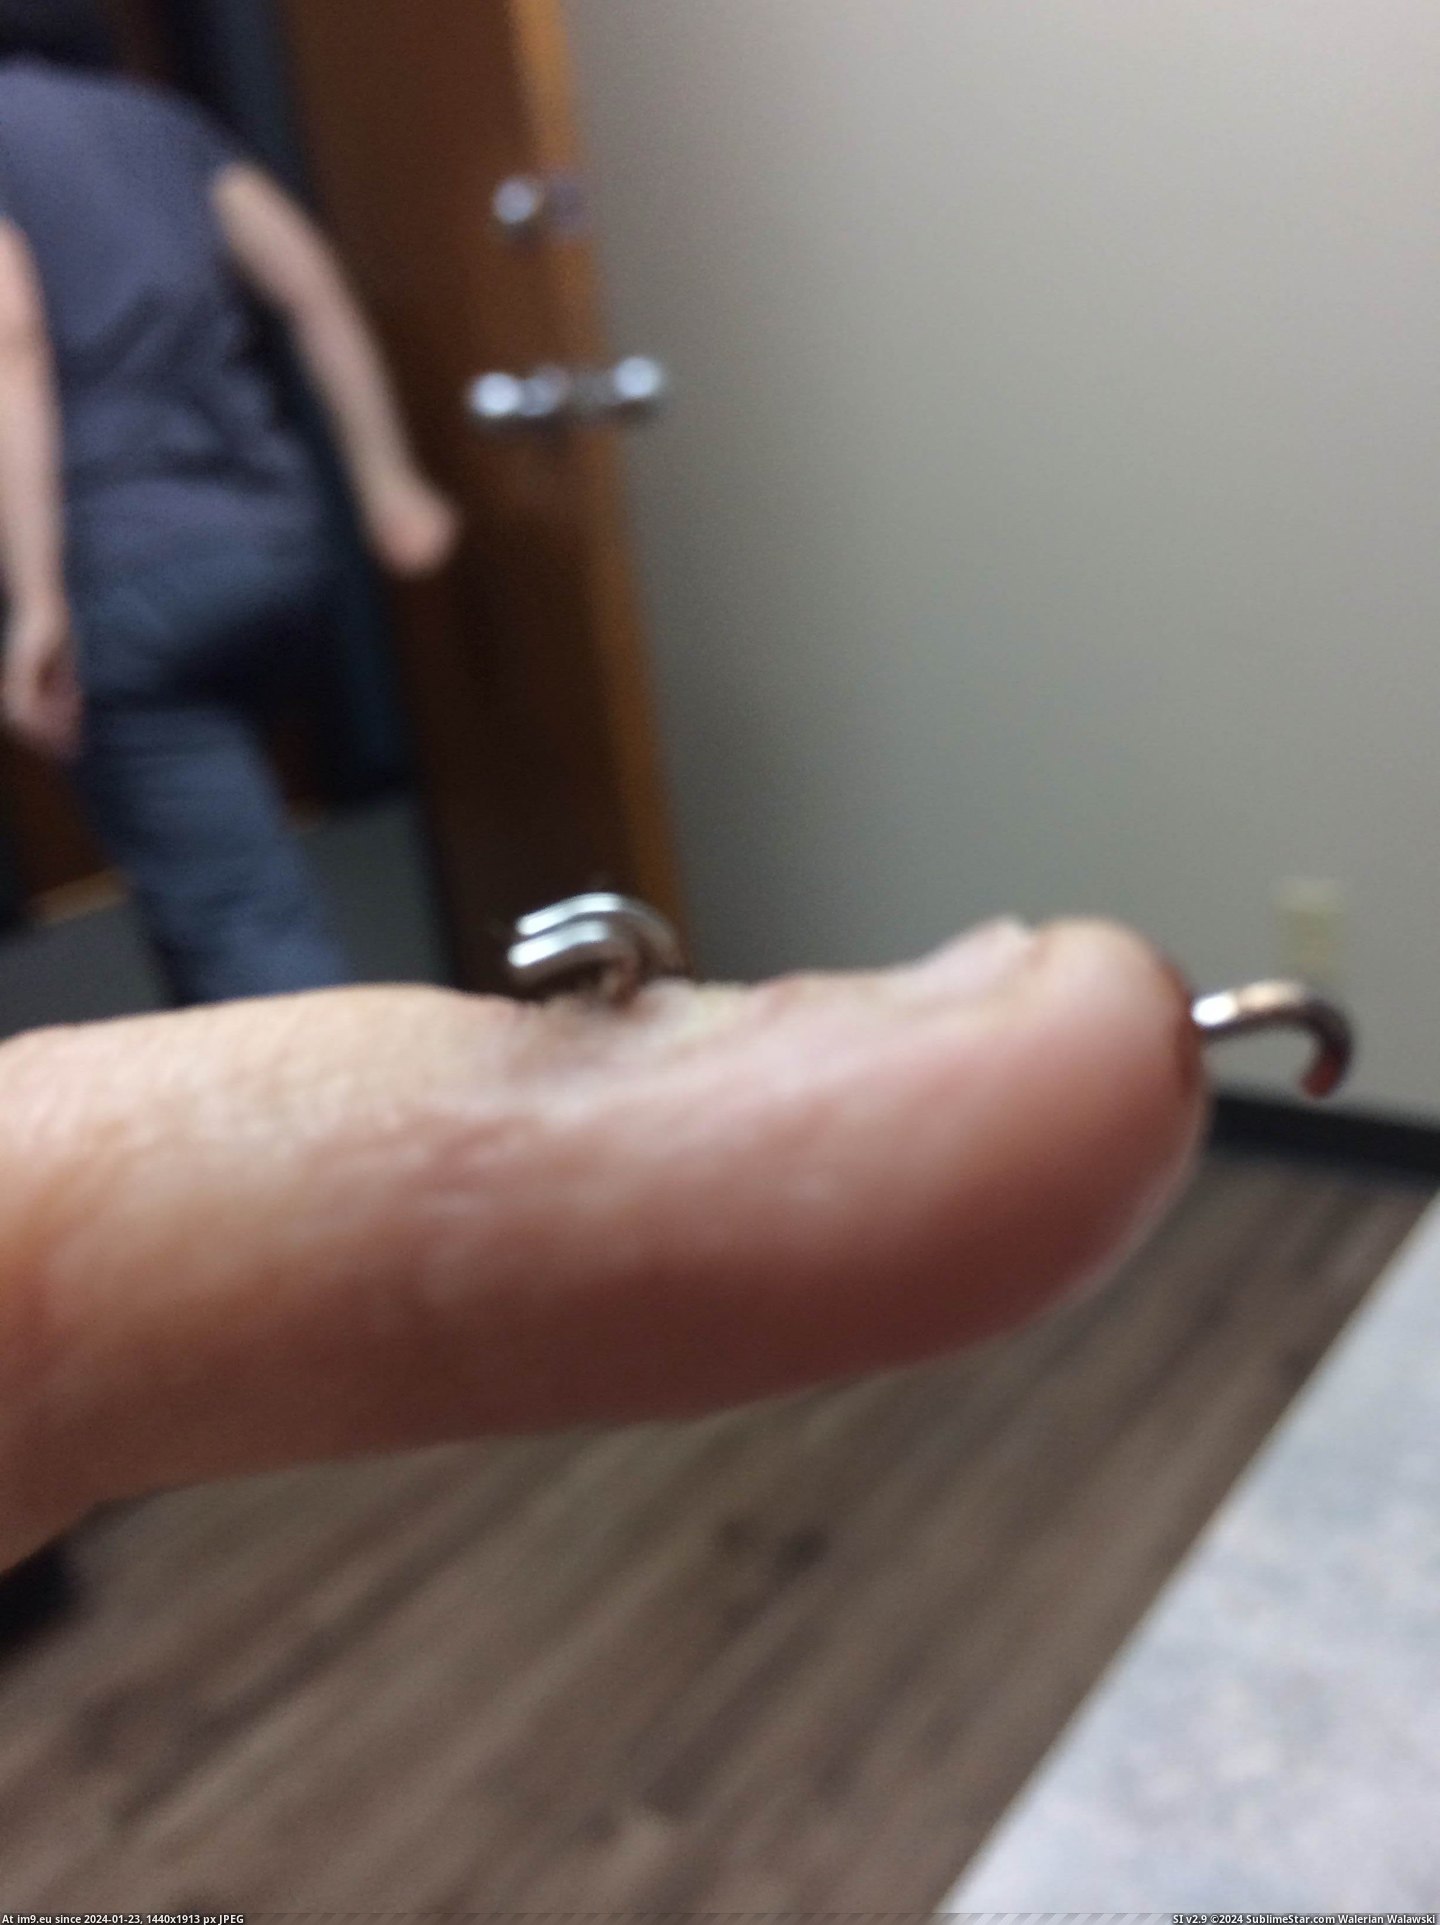 #Wtf #Wife #Pinky #Finger #Broken [Wtf] My Wife's Broken Pinky Finger 1 Pic. (Bild von album My r/WTF favs))